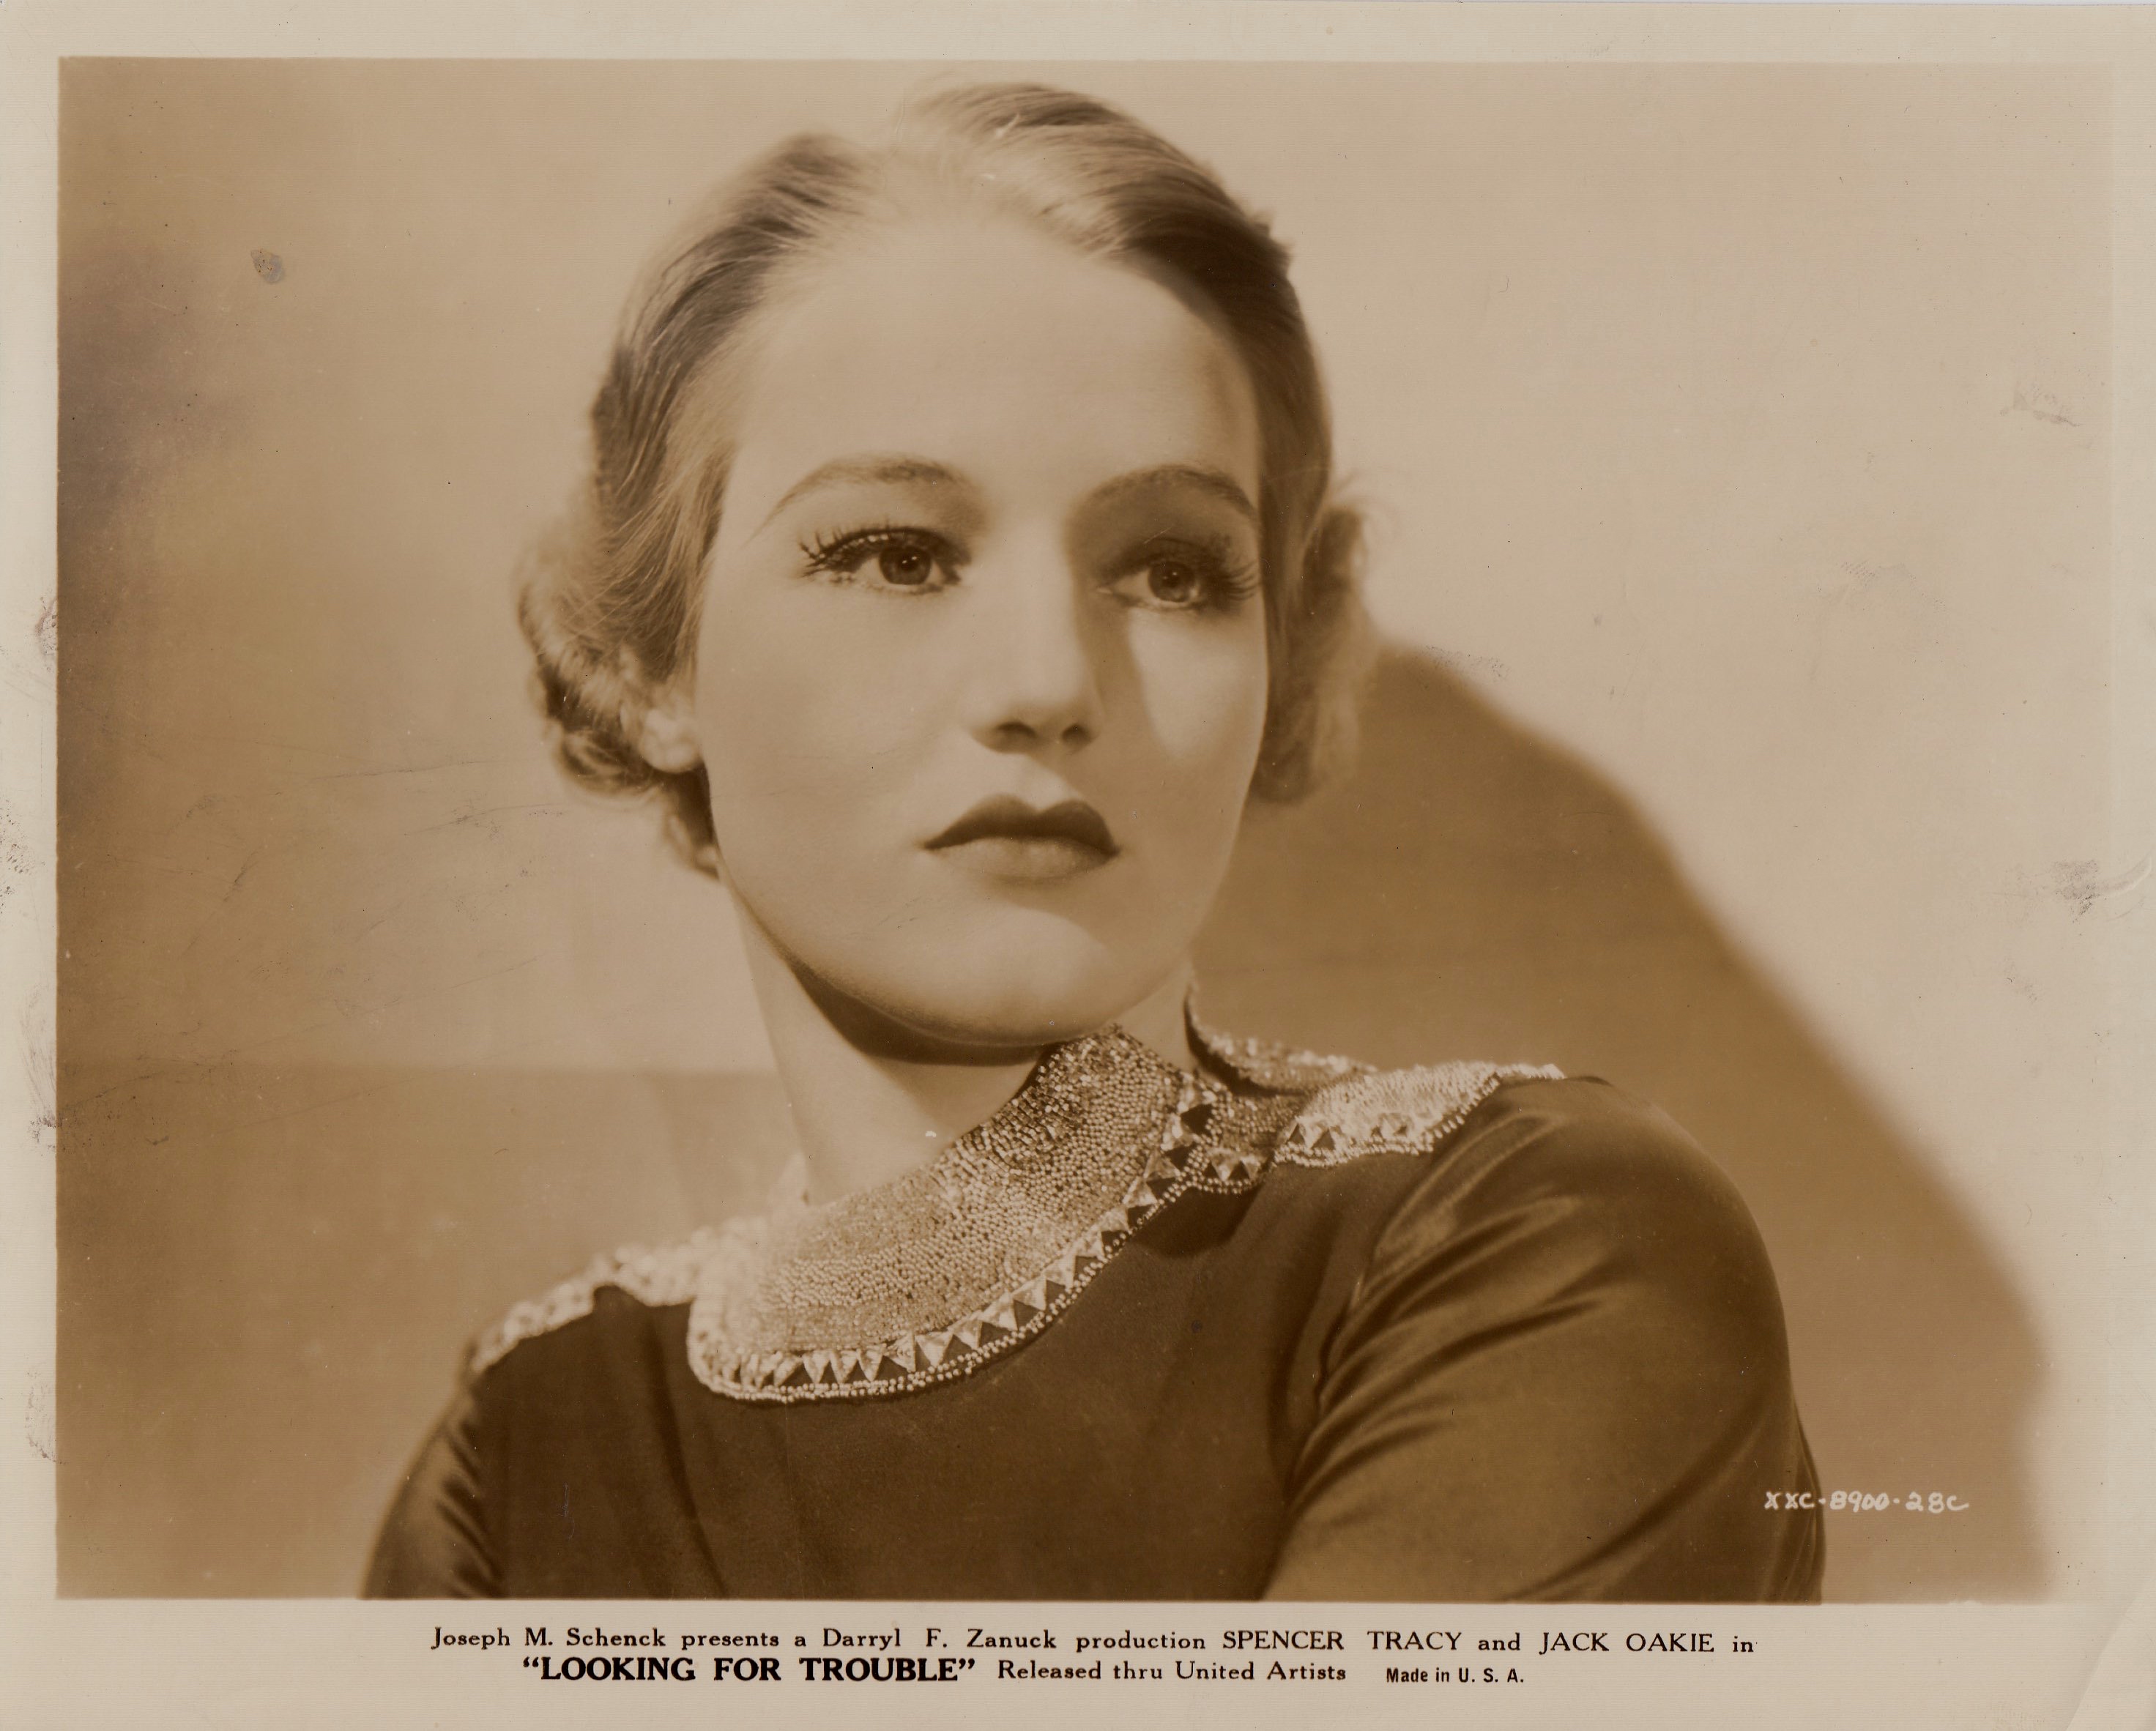 Constance Cummings 1934